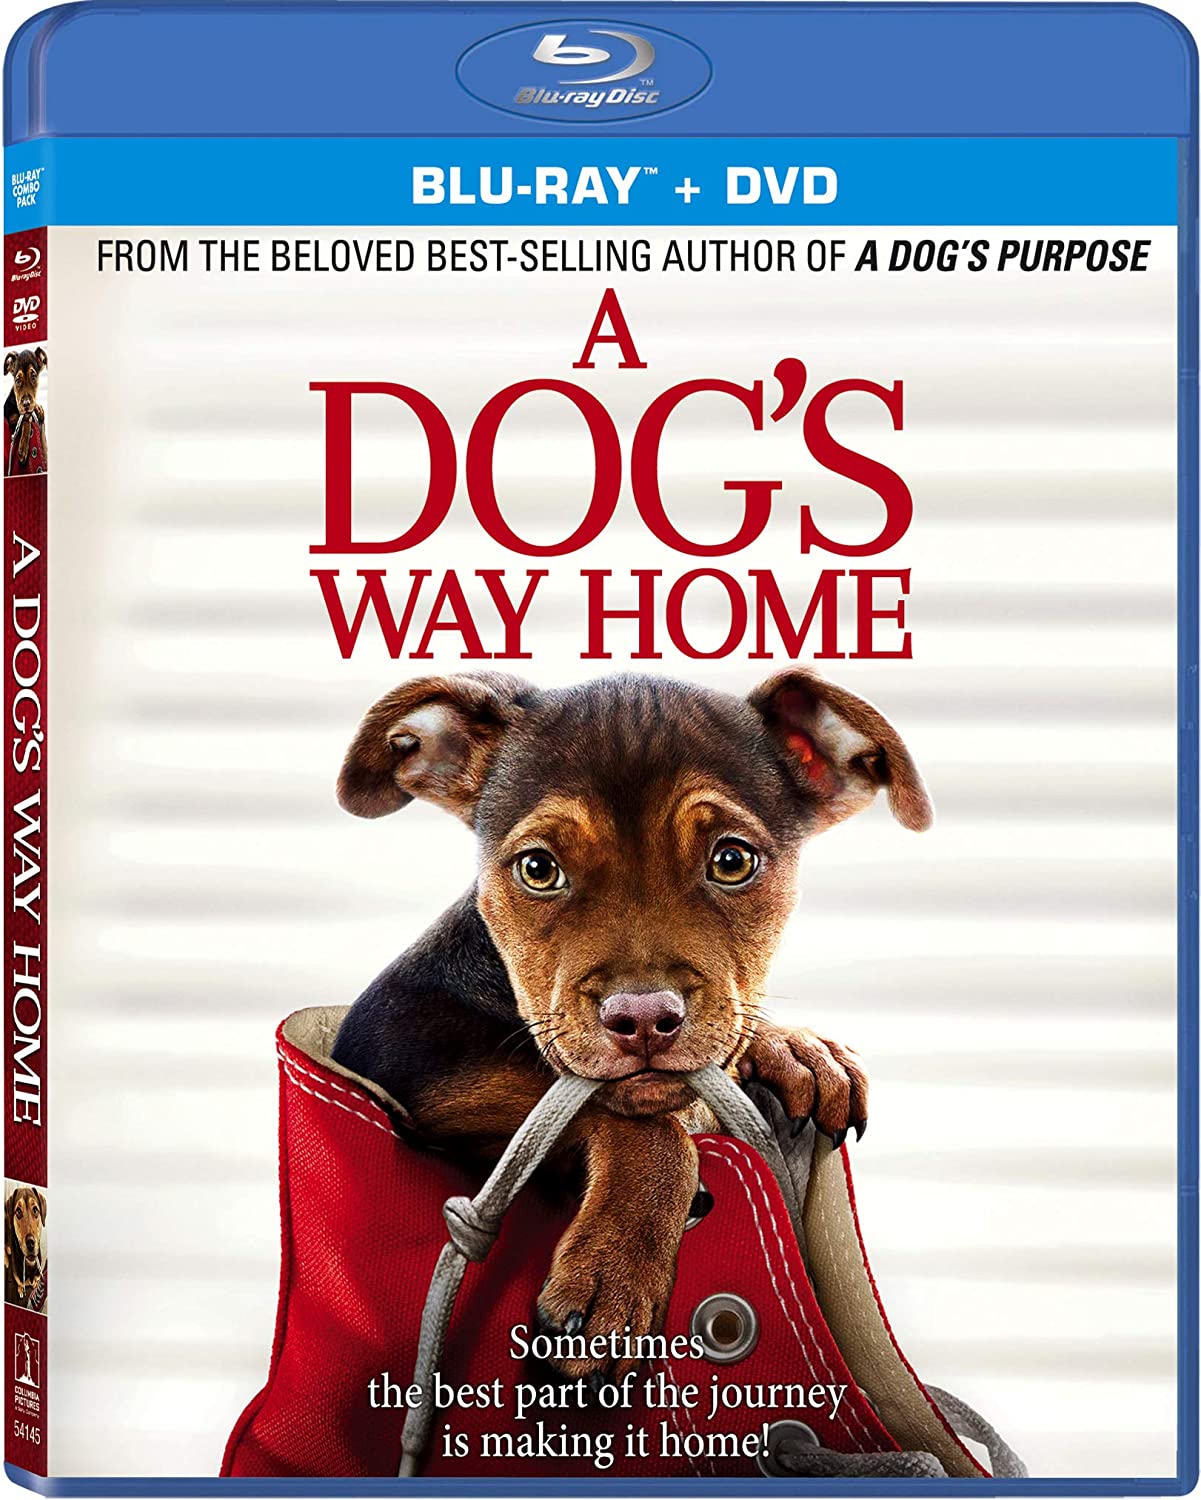 A Dog's Way Home Blu-ray + DVD + Digital